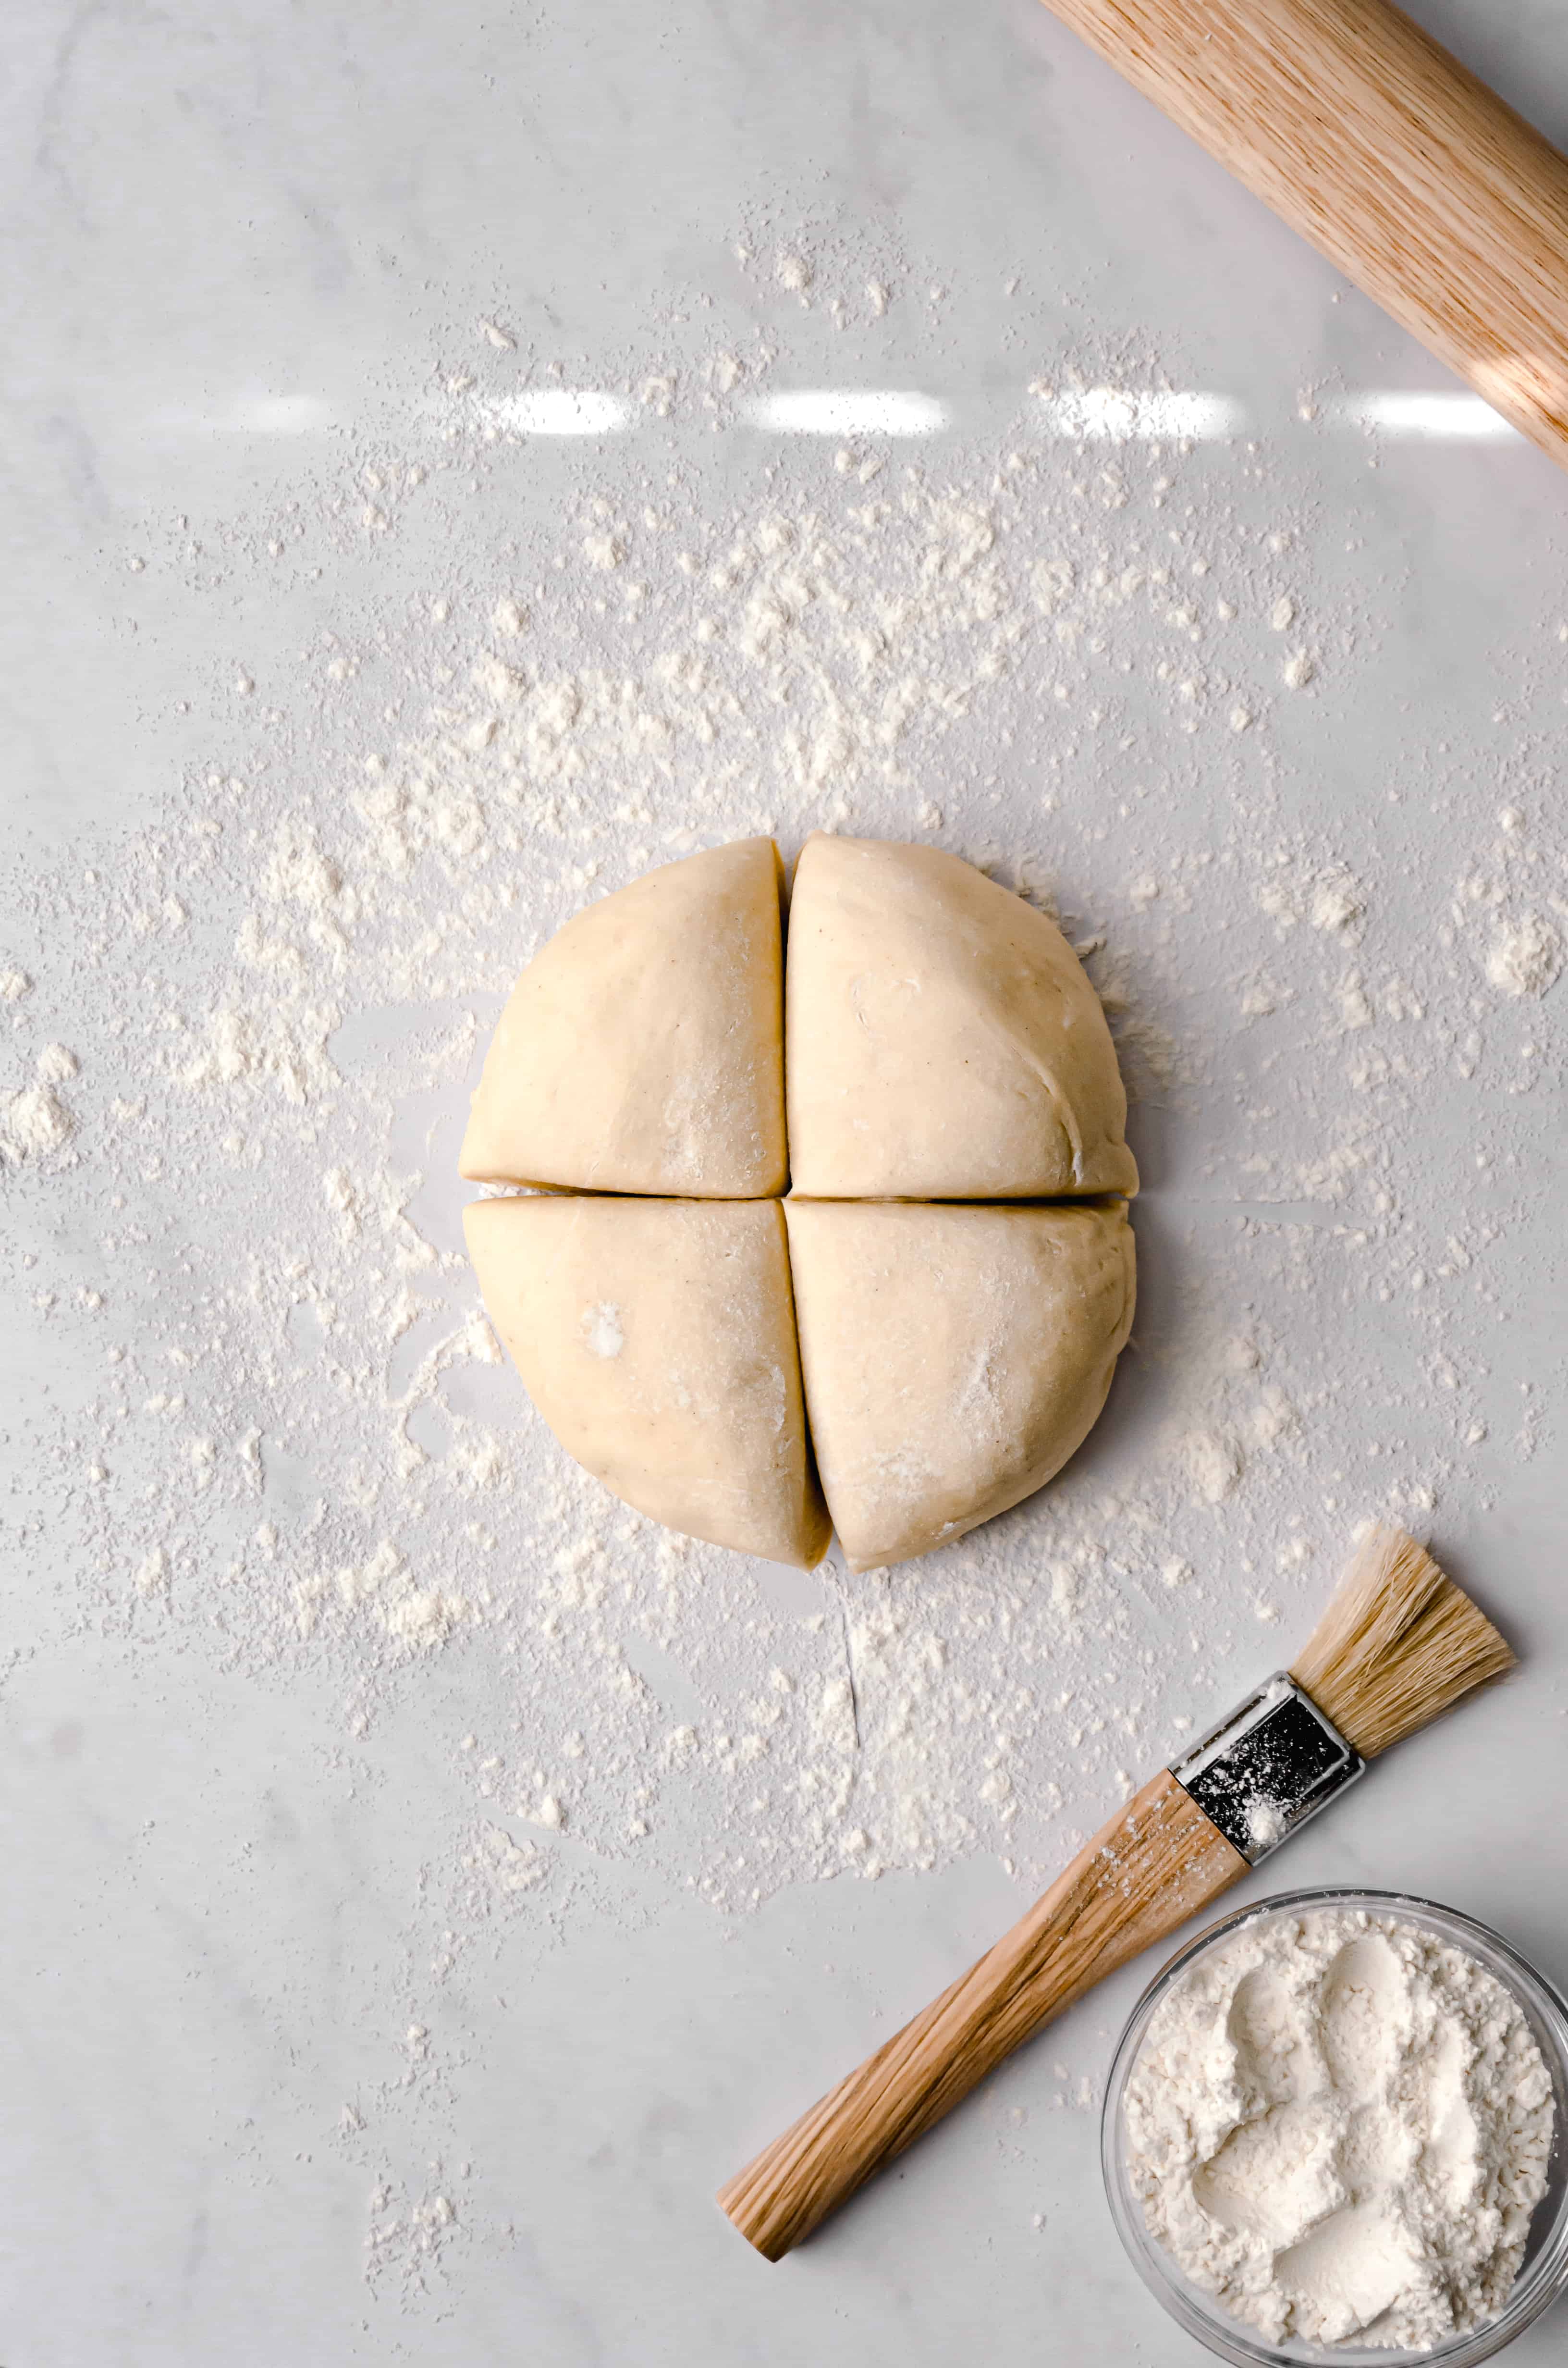 brioche dough cut into quarters on flour dusted marble surface.